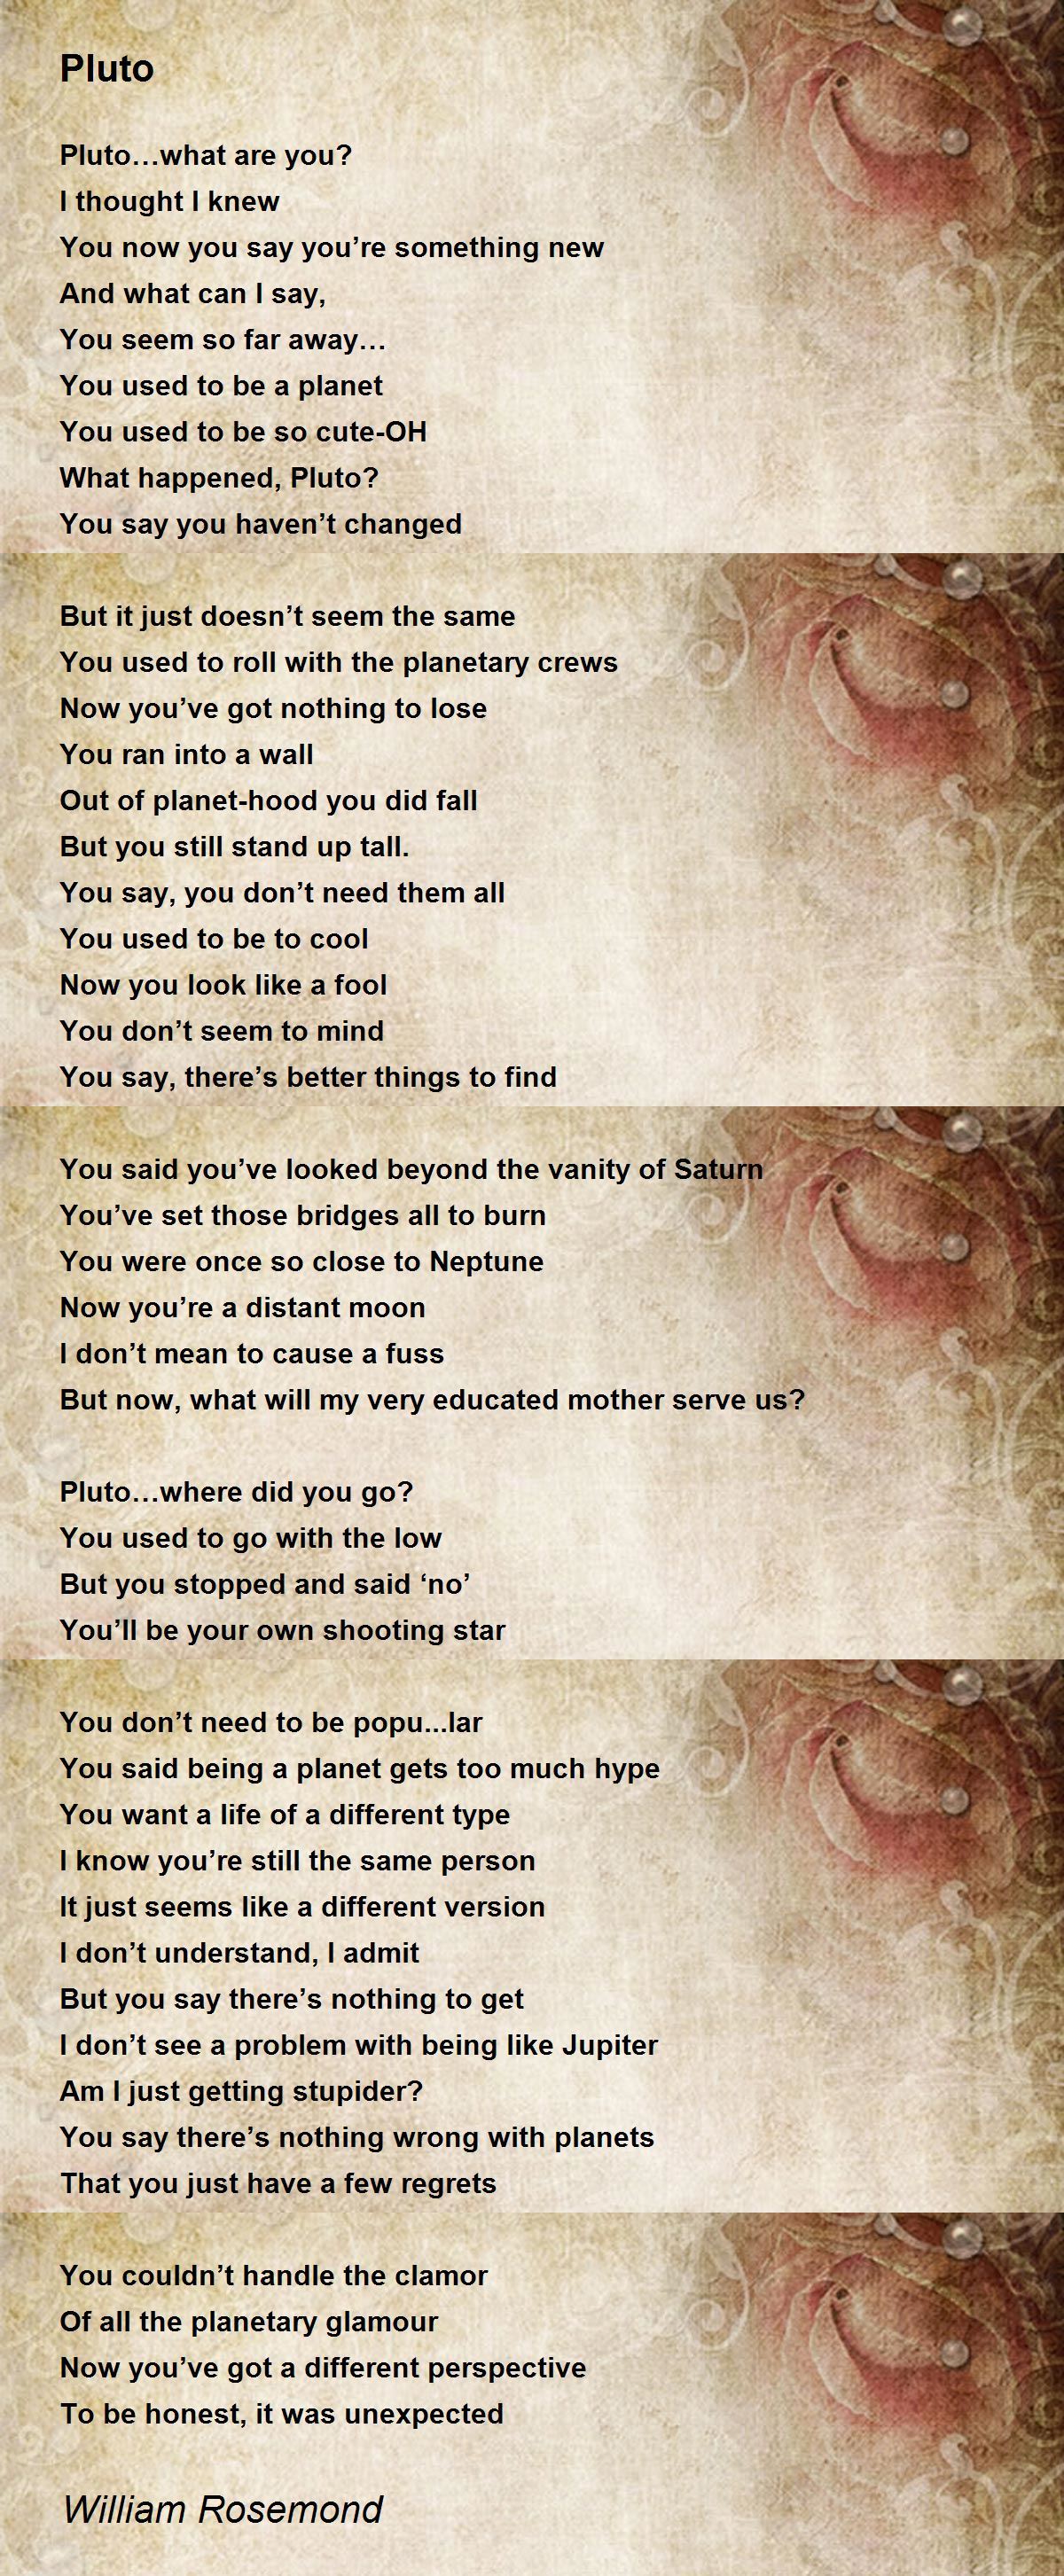 Pluto - Pluto Poem by William Rosemond